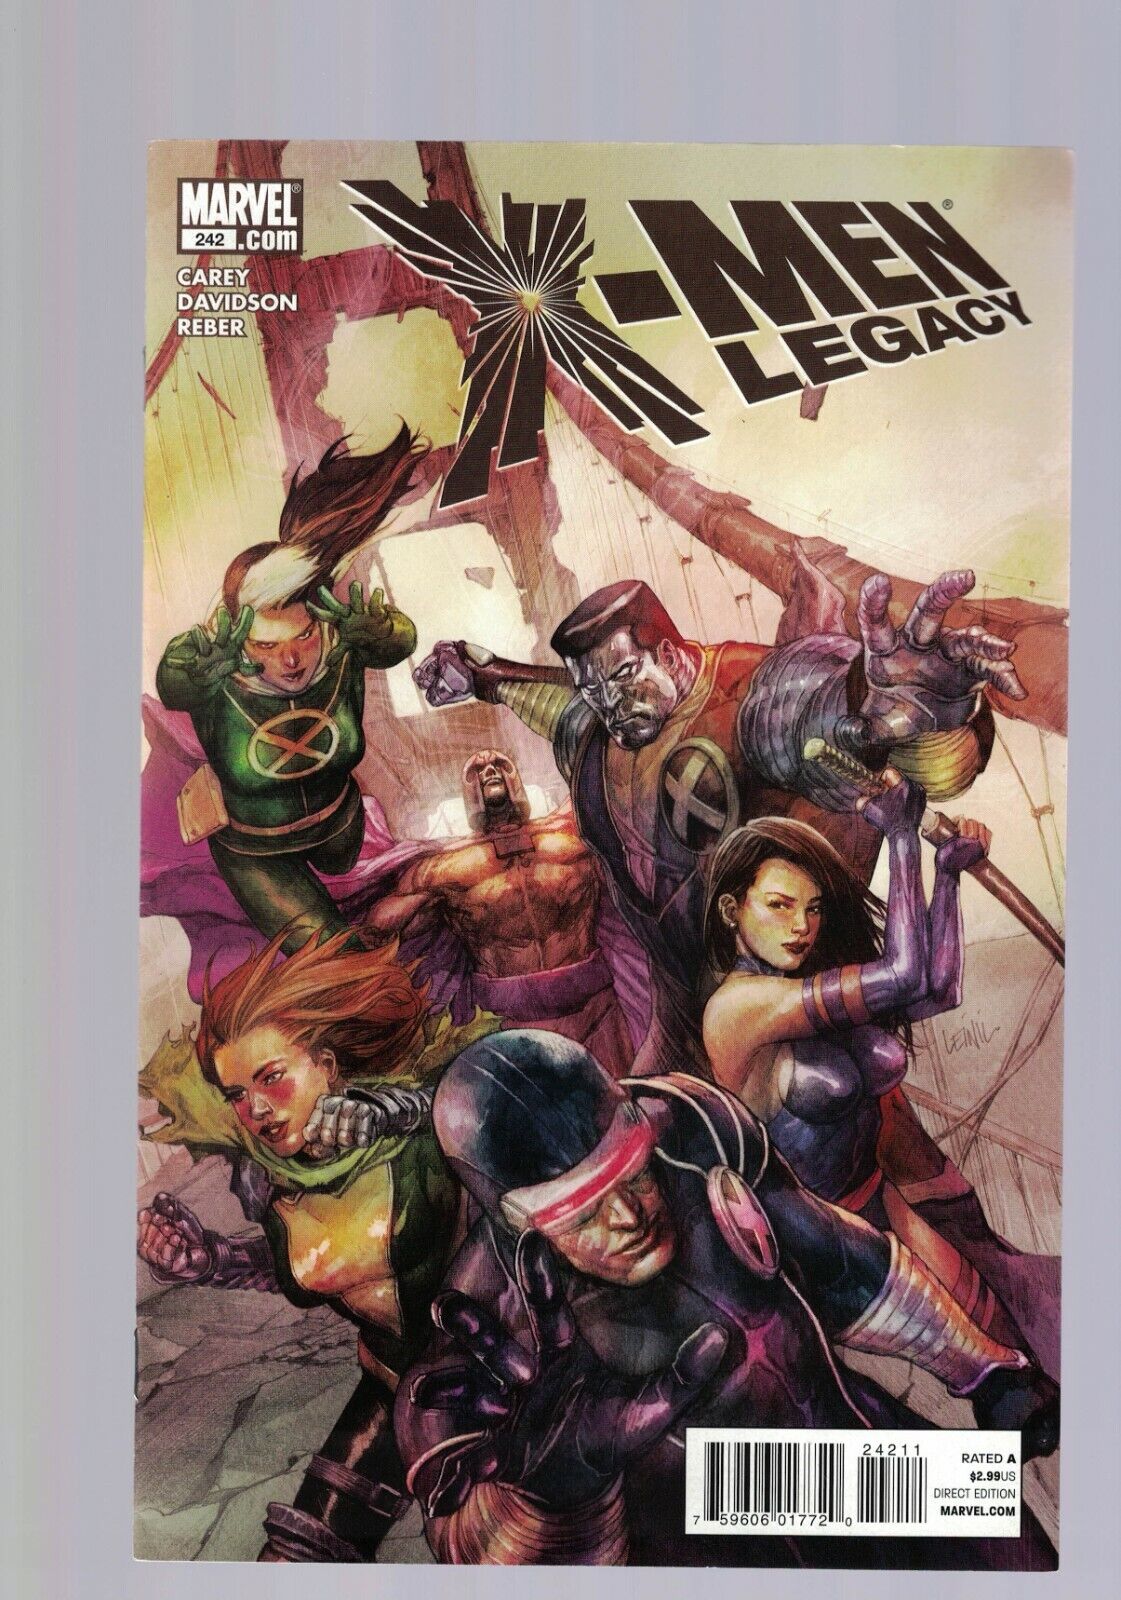 Marvel Comic  X-Men Legacy No. 242 January 2011 $2.99 USA